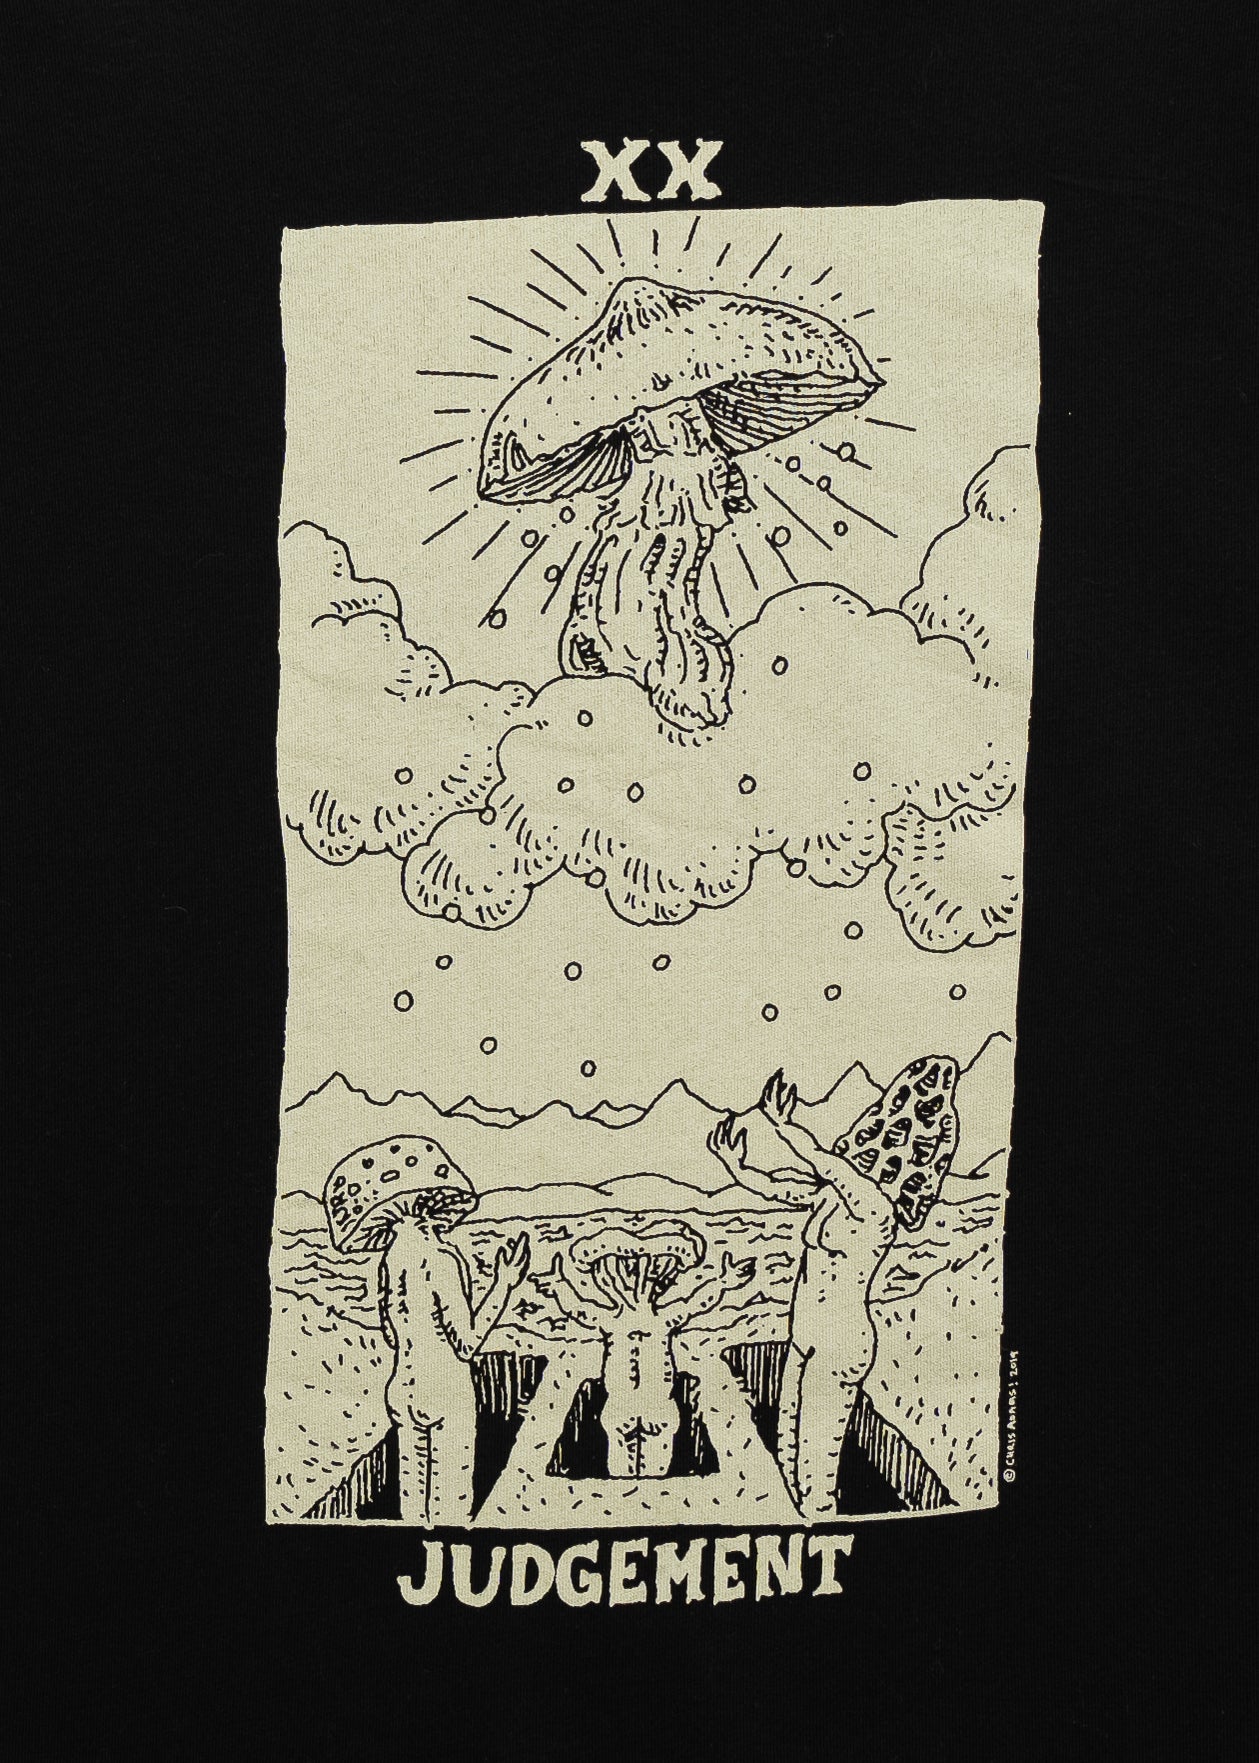 Judgement Mushroom Tarot Shirt, Black Cotton US Made